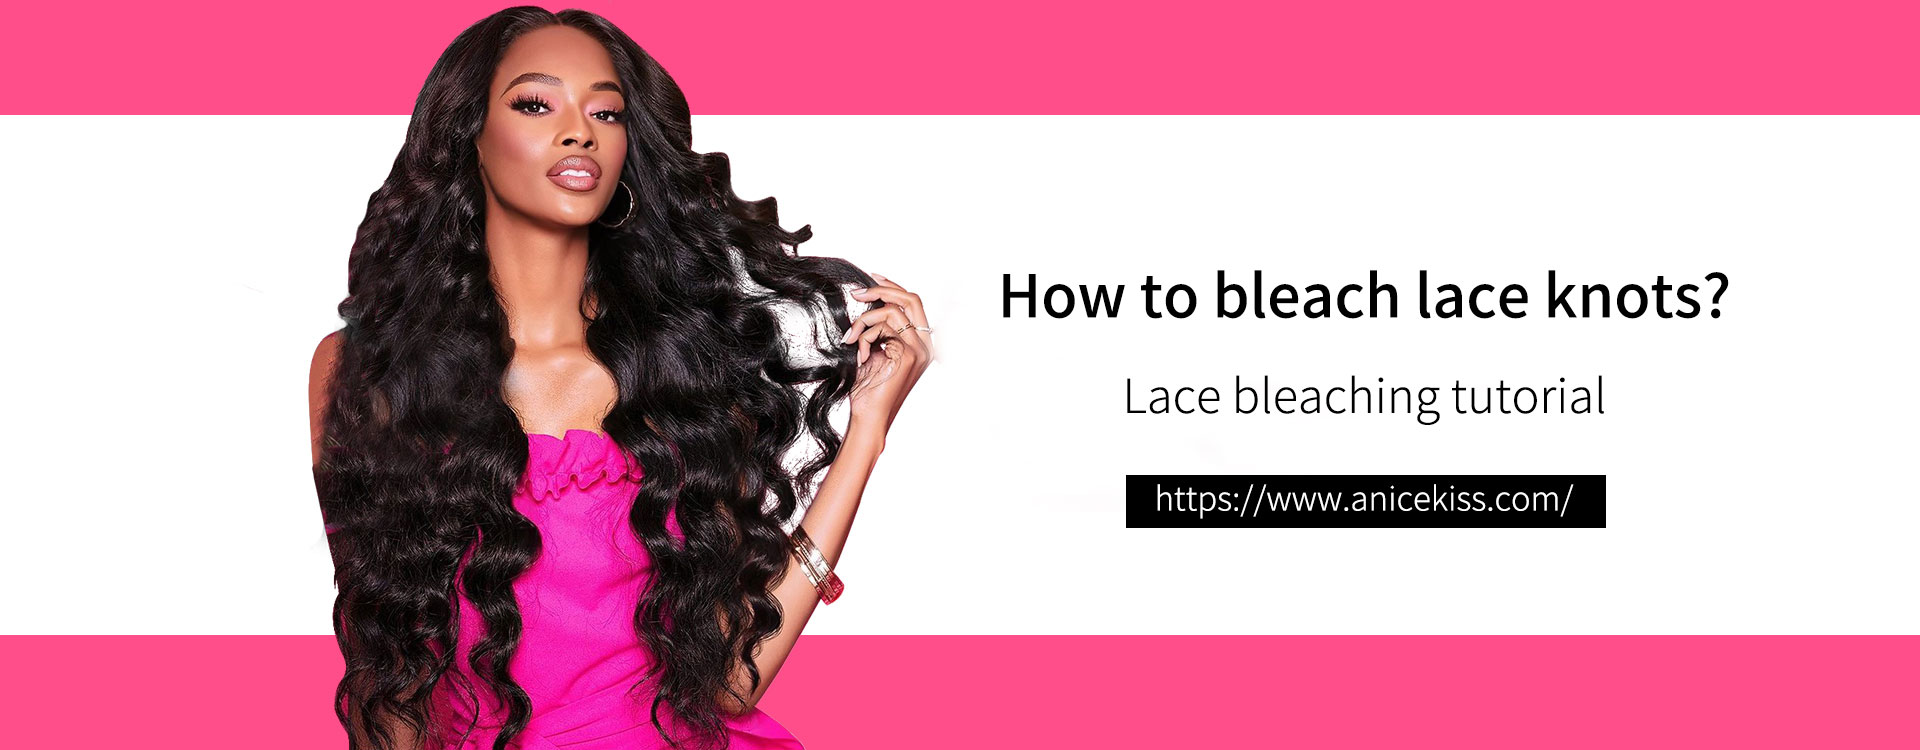 lace bleaching tutorial